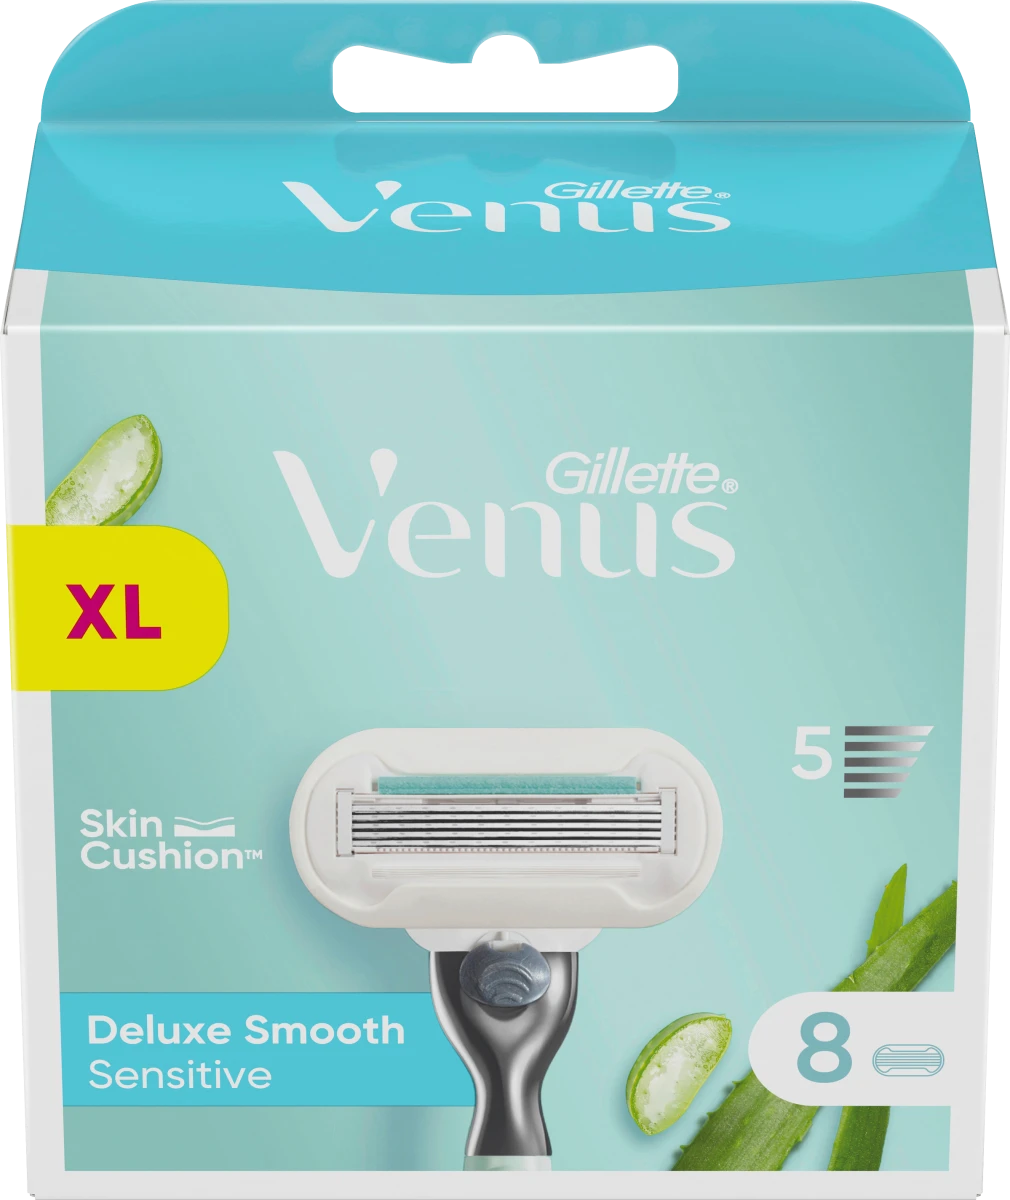 Бритвенные лезвия Gillette Venus Deluxe Smooth Sensitive, 8 шт бритвенный станок gillette mach3 3 лезвия 1 сменная кассета